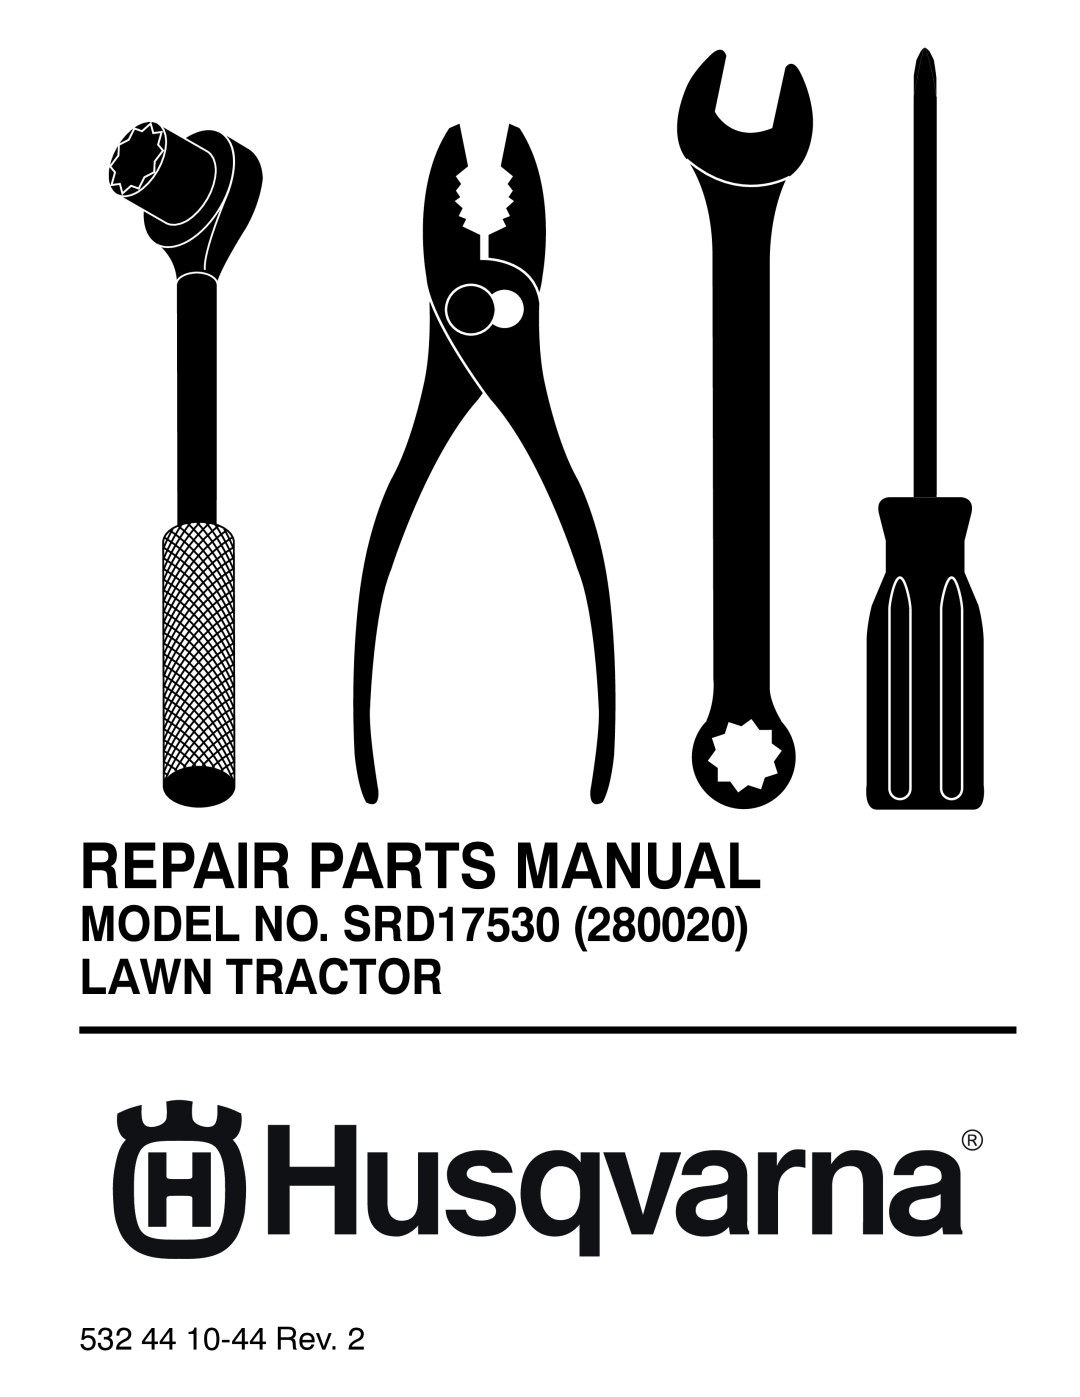 Husqvarna SRD17530 (280020) manual Repair Parts Manual, MODEL NO. SRD17530 LAWN TRACTOR, 532 44 10-44 Rev 